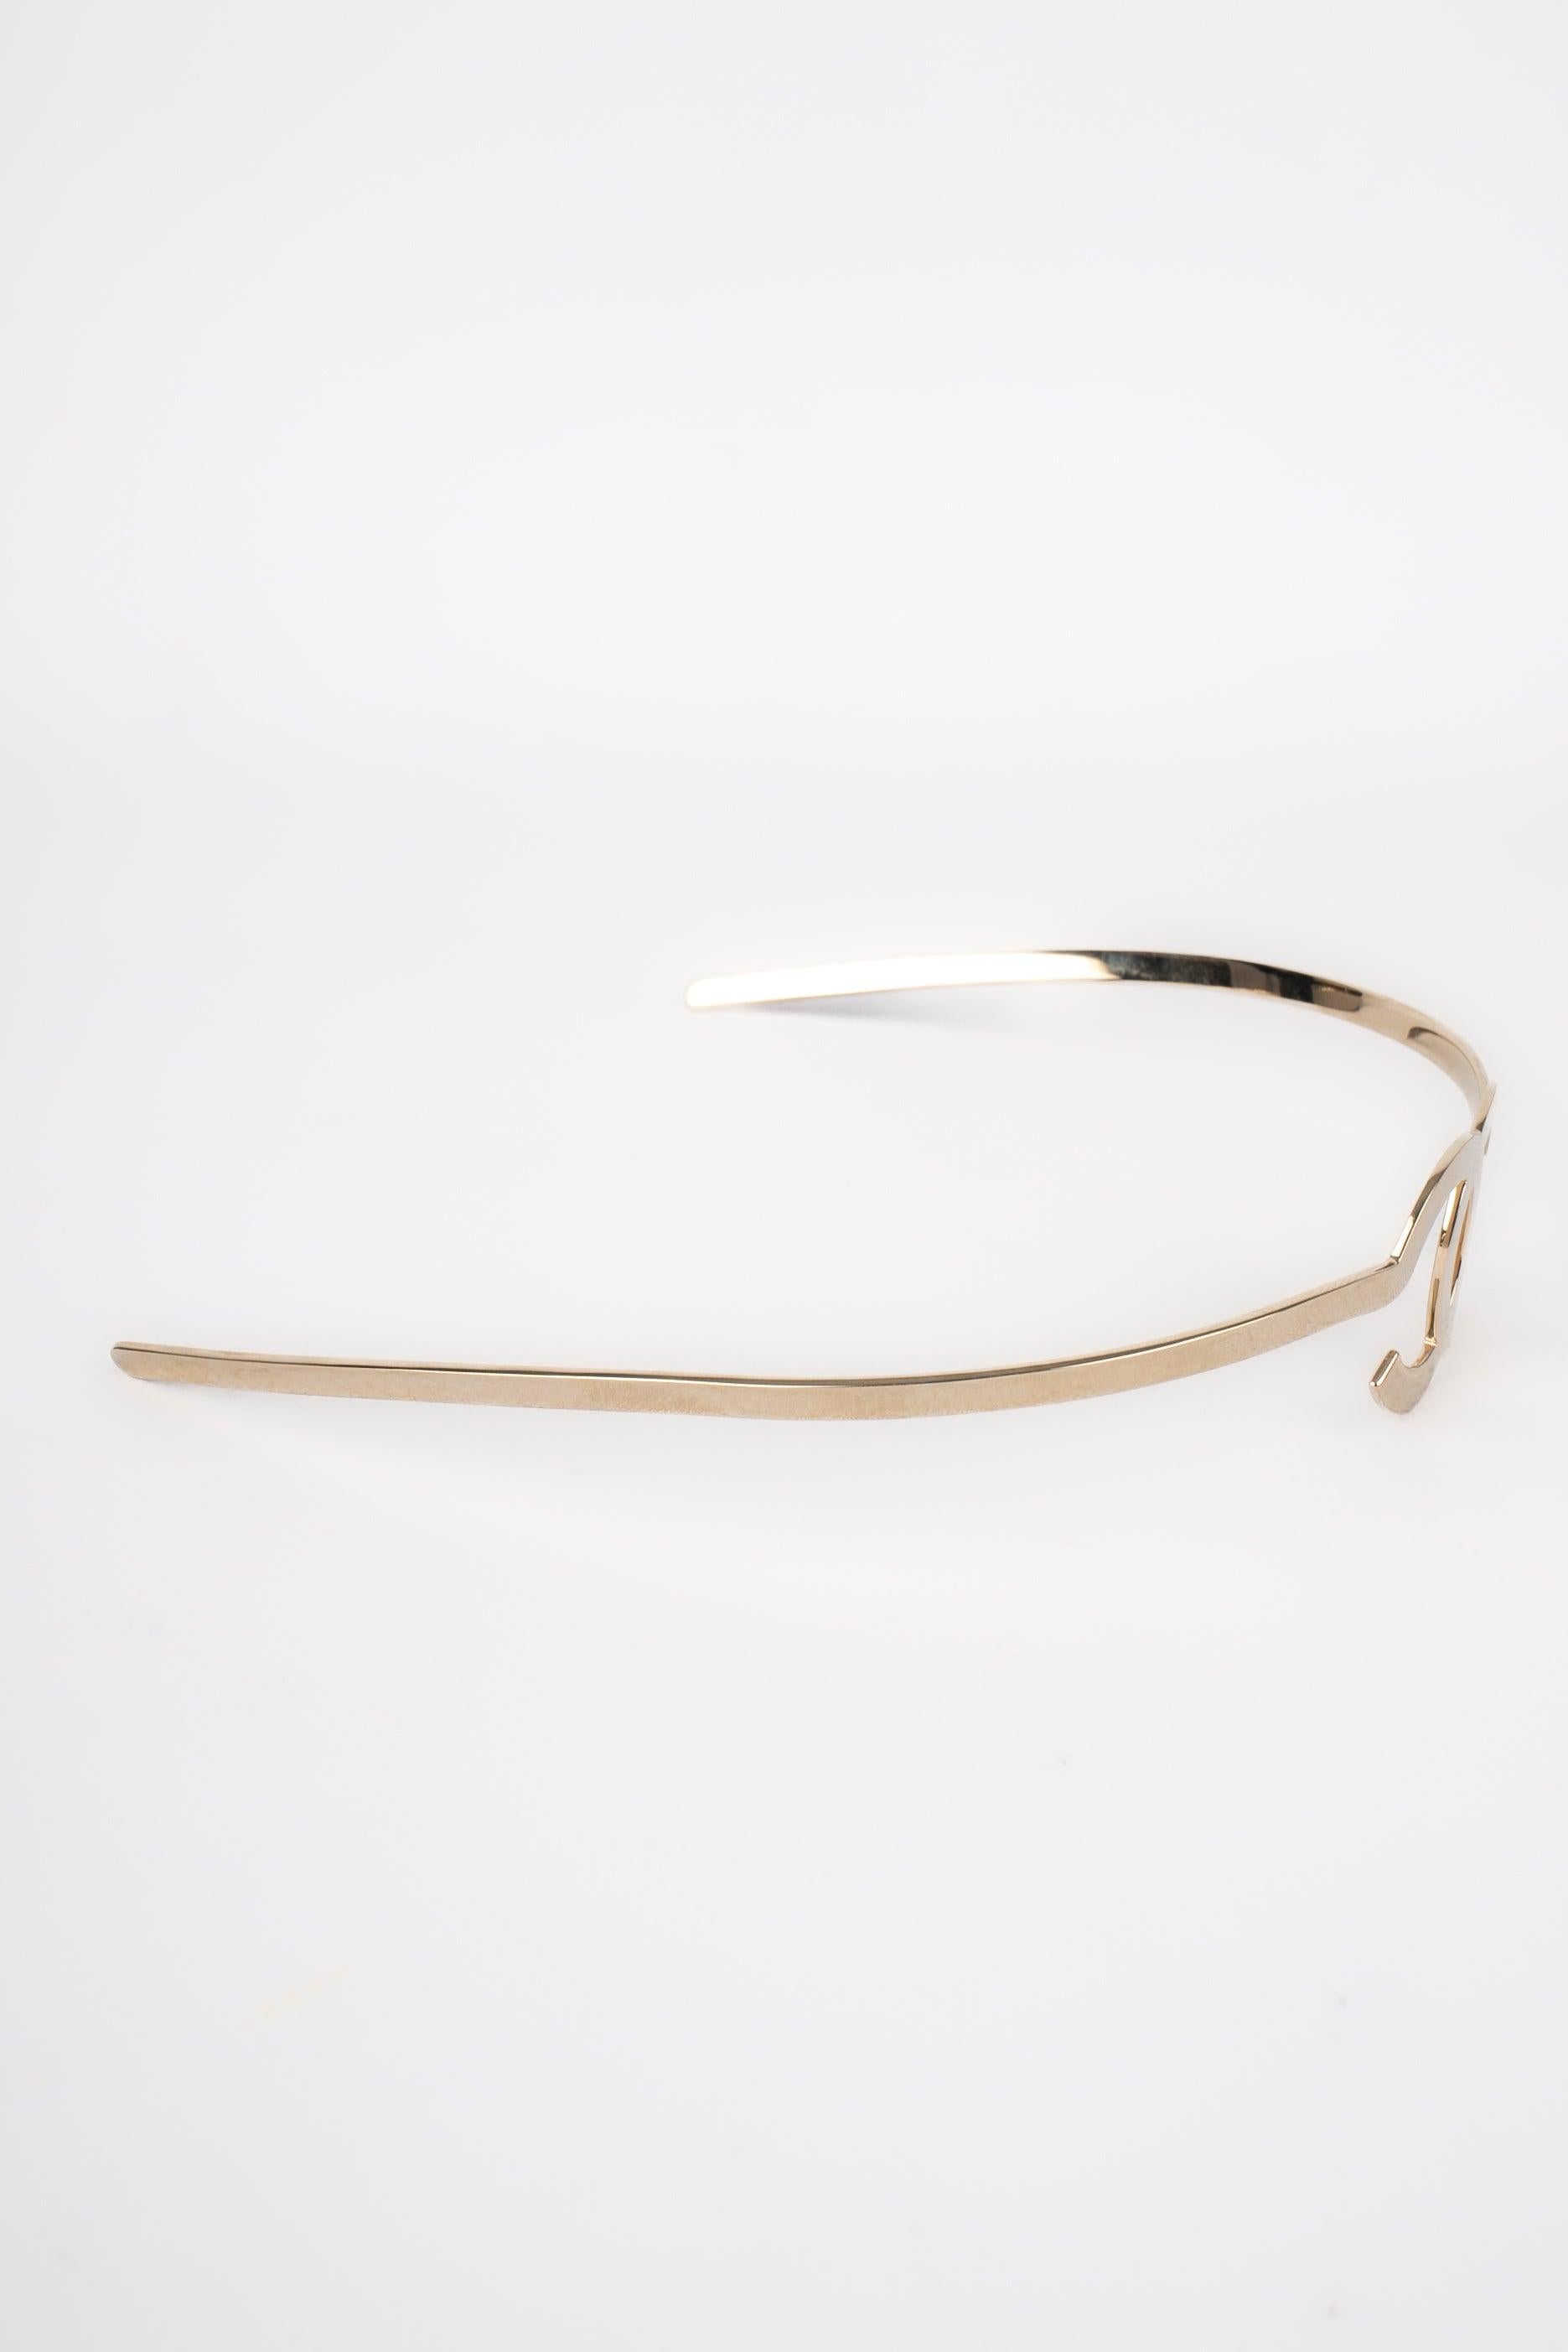 Women's Chanel Very Light Golden Metal Tiara / Head Jewelry, 2021 For Sale